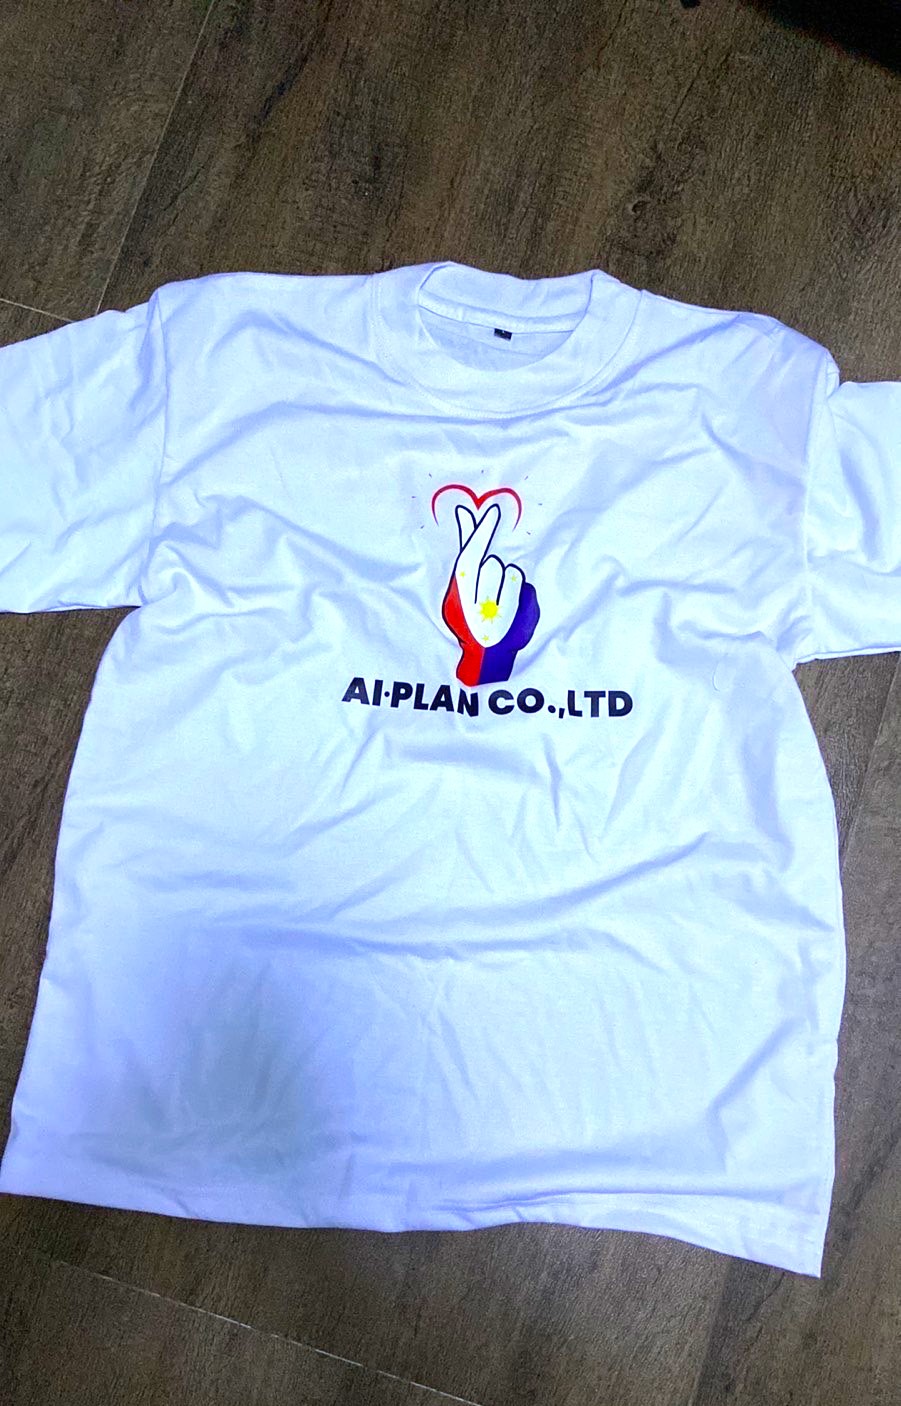 We made a company  T-shirt‼